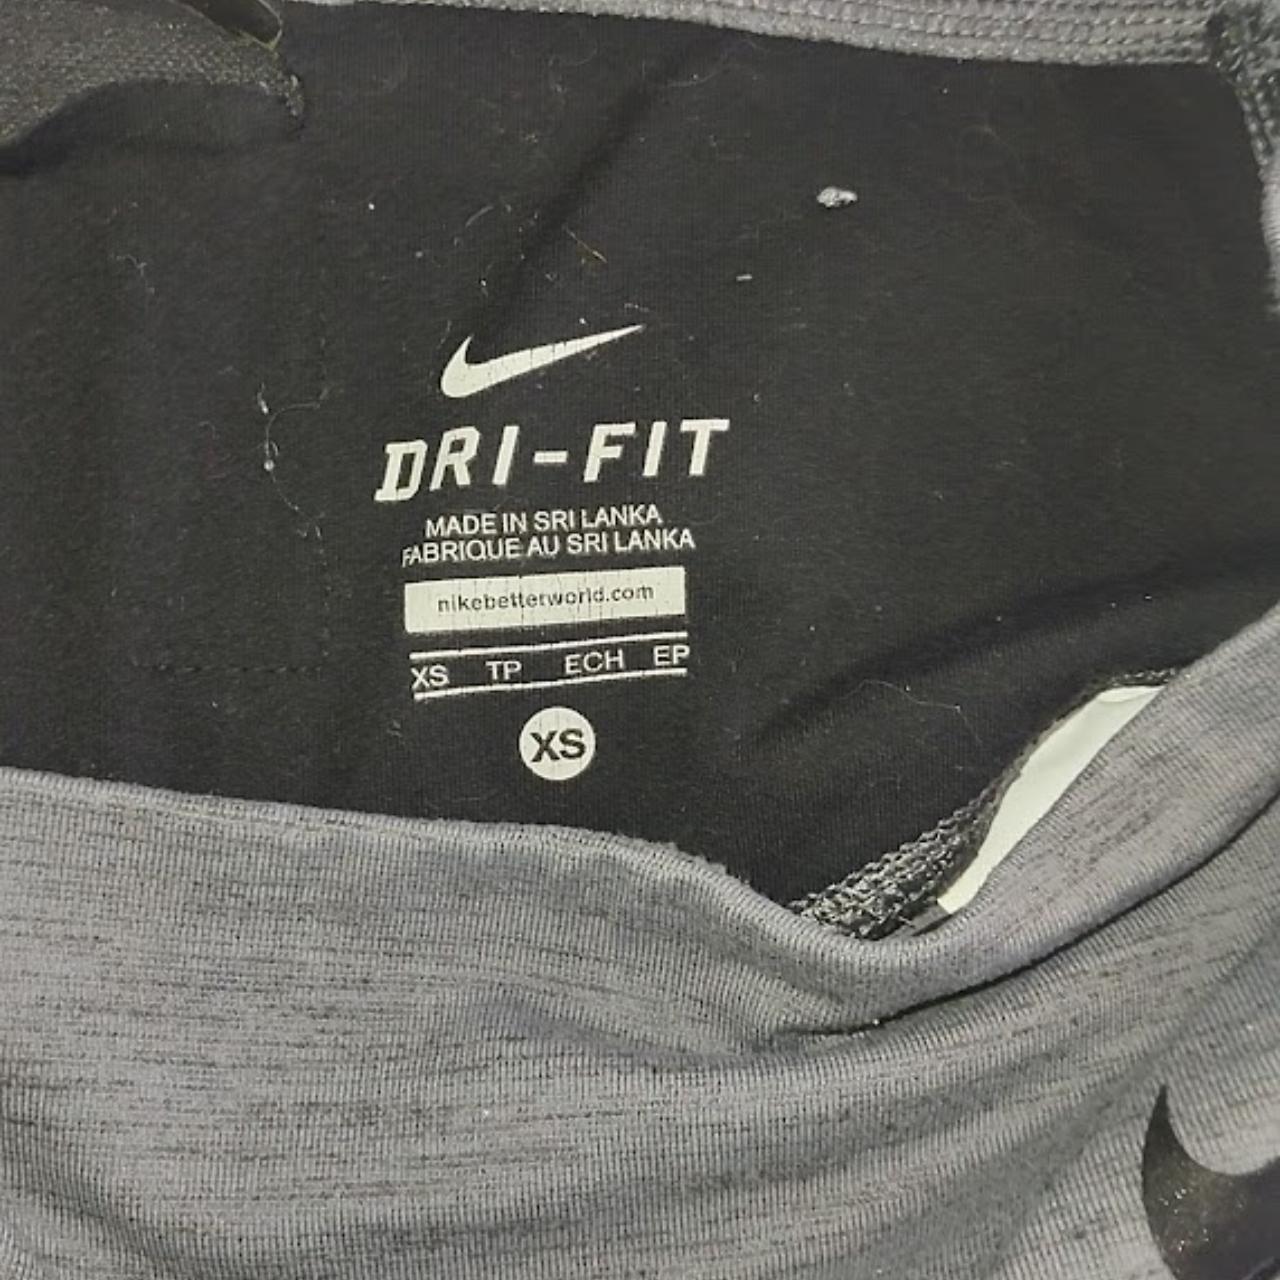 Nike dri fit leggings #nike #leggings #lulu - Depop